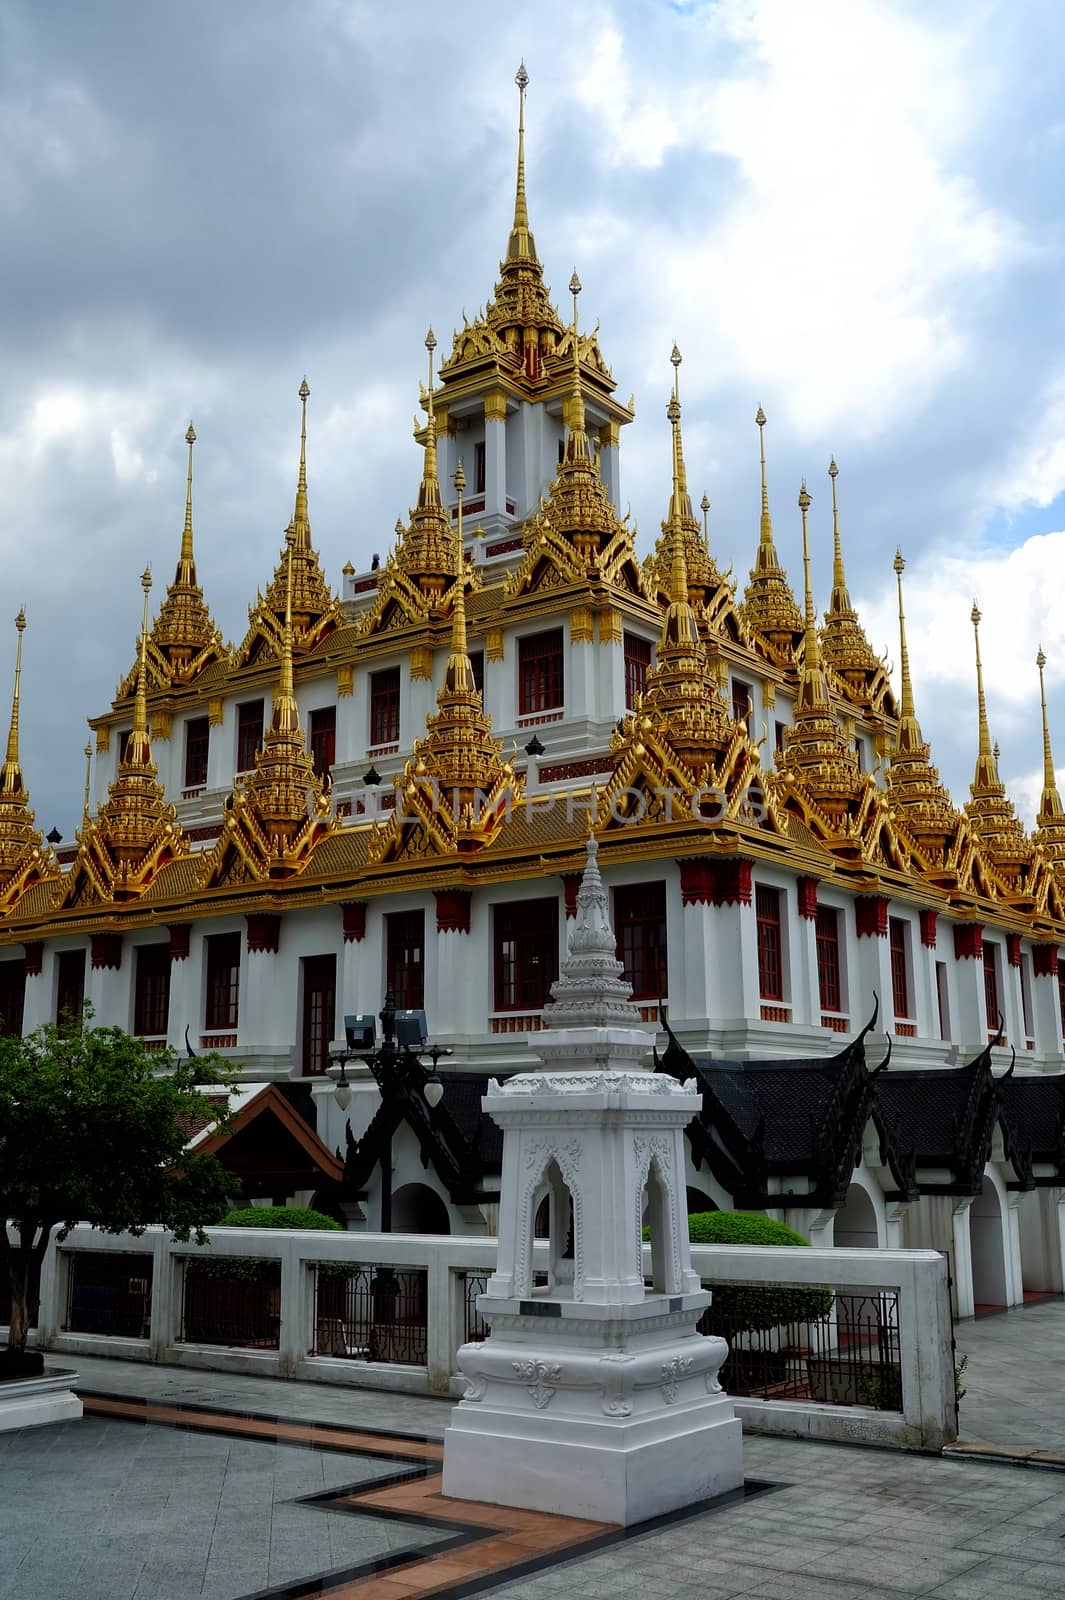 Scenery of Loha Prasat Temple, Landmark of Bangkok Thailand. by mesamong